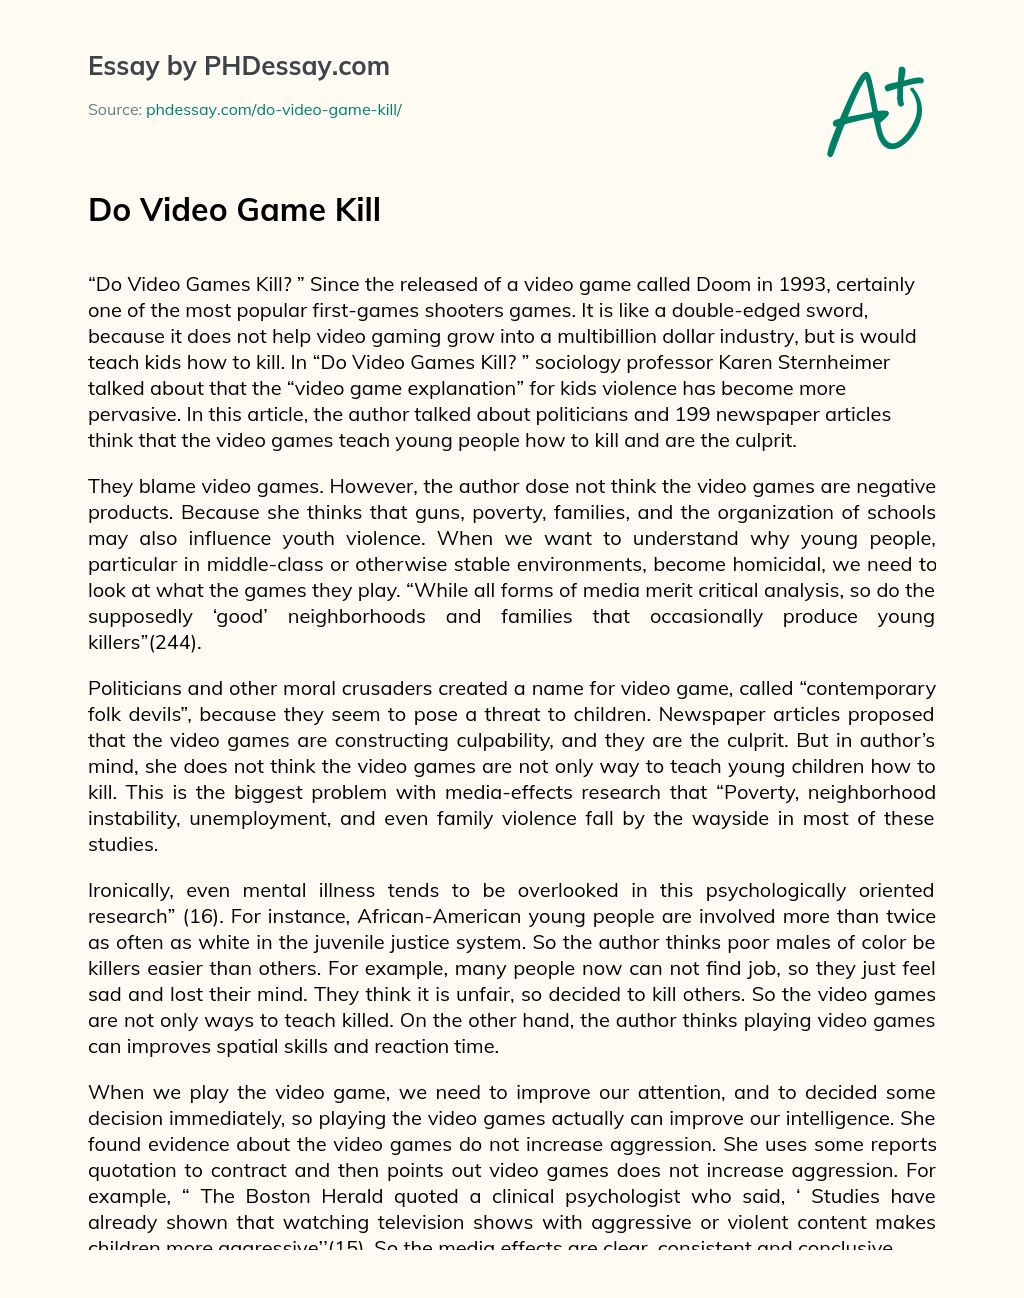 Do Video Game Kill essay